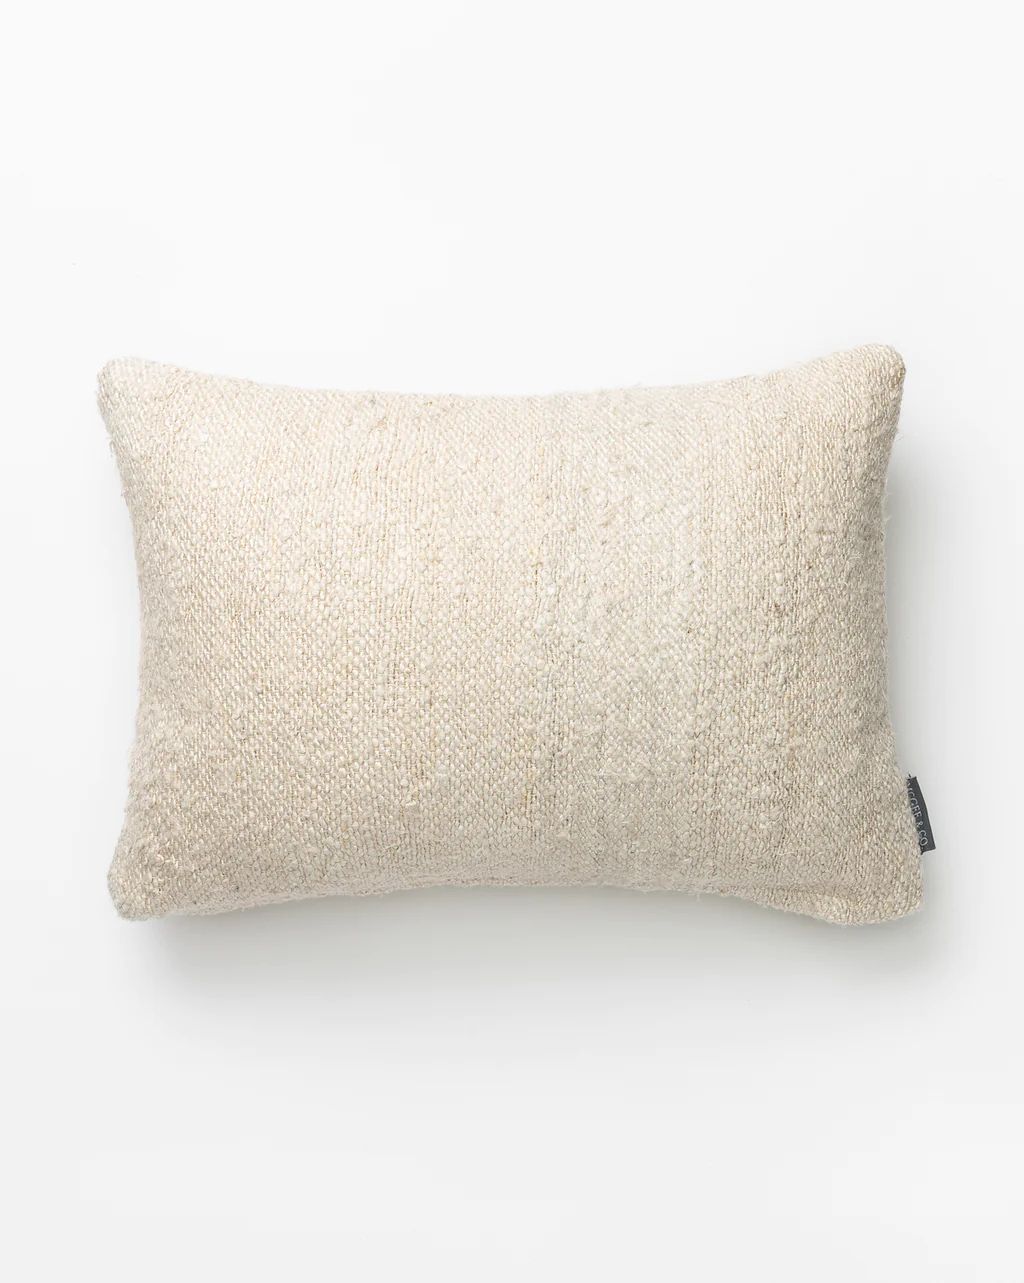 Tari Pillow Cover | McGee & Co.